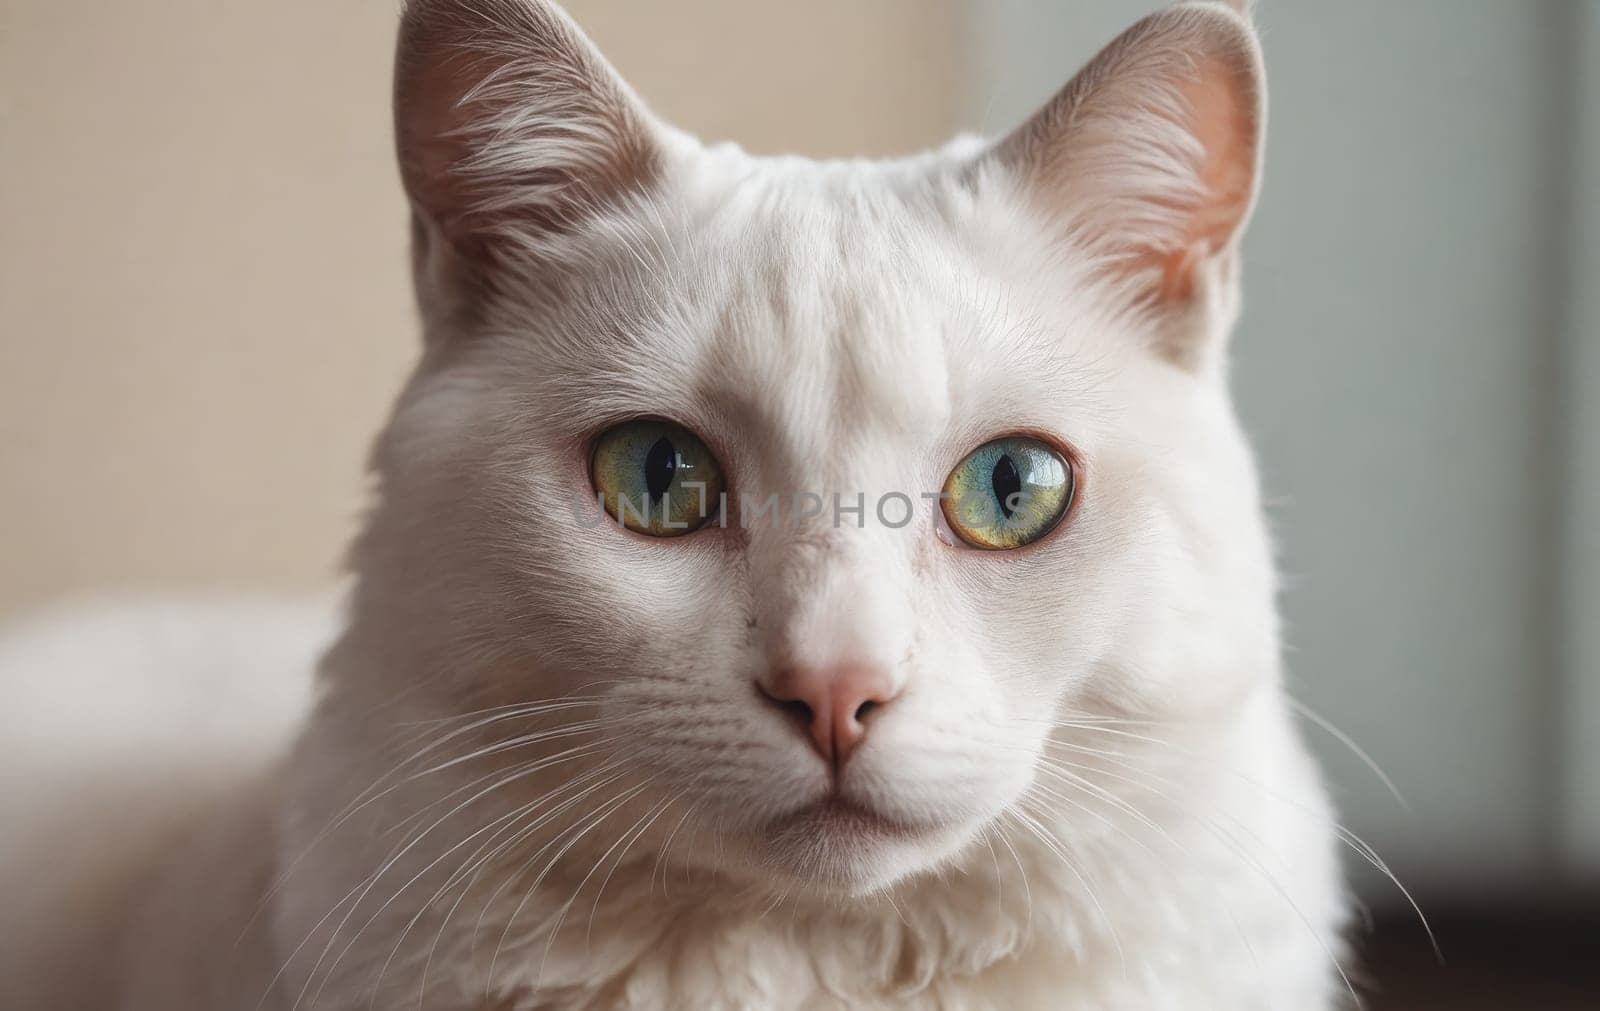 Closeup shot of a white Felidae cat with enchanting blue eyes, creating a serene yet captivating visual.